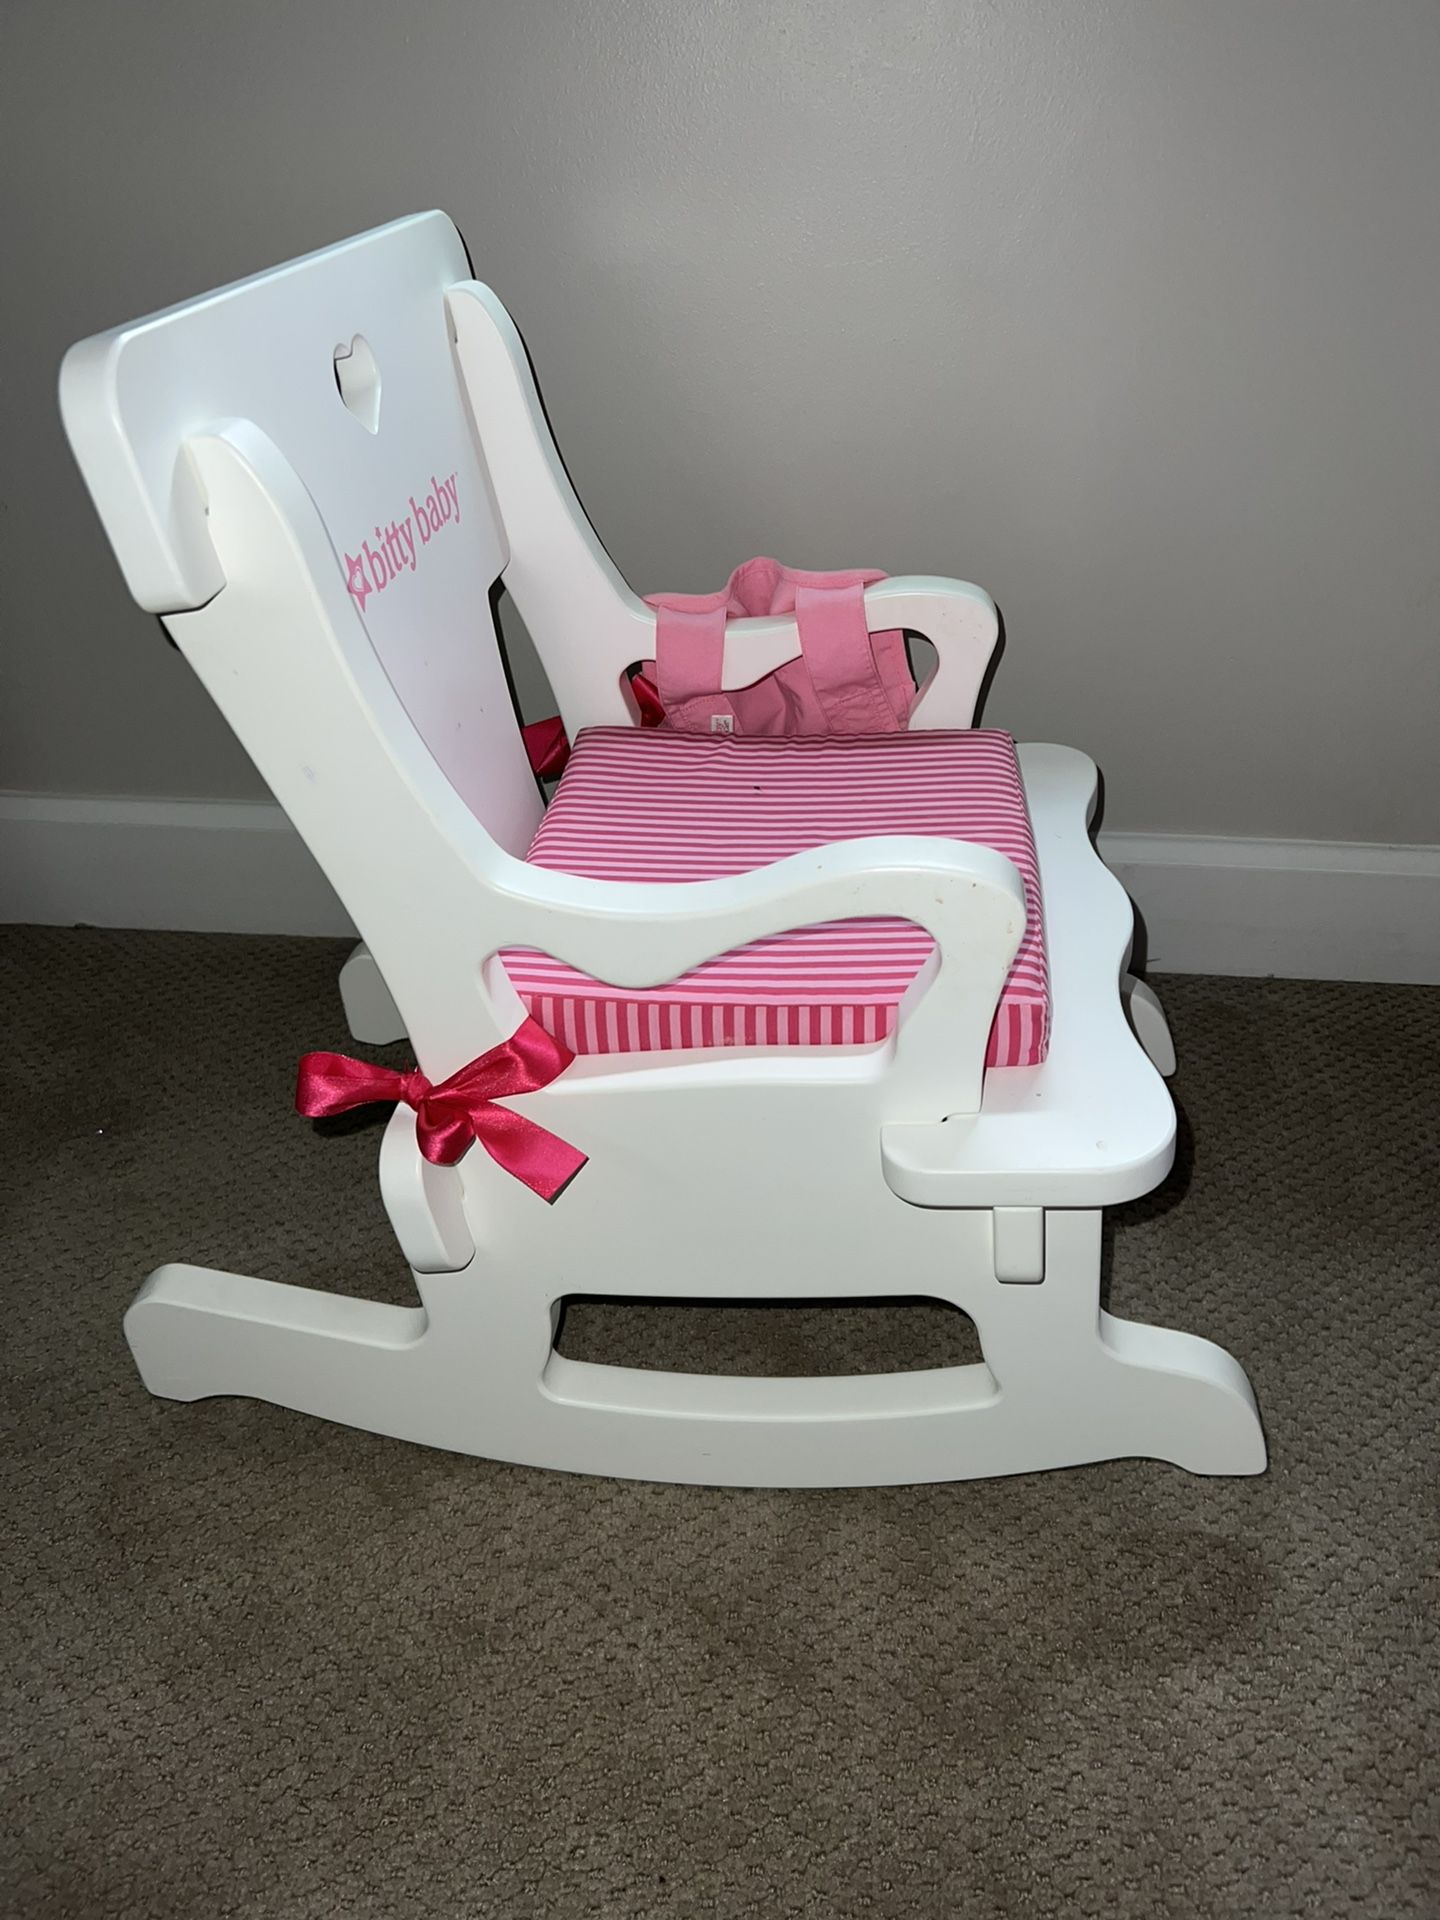 Bitty Baby (American Girl) Rocking Chair